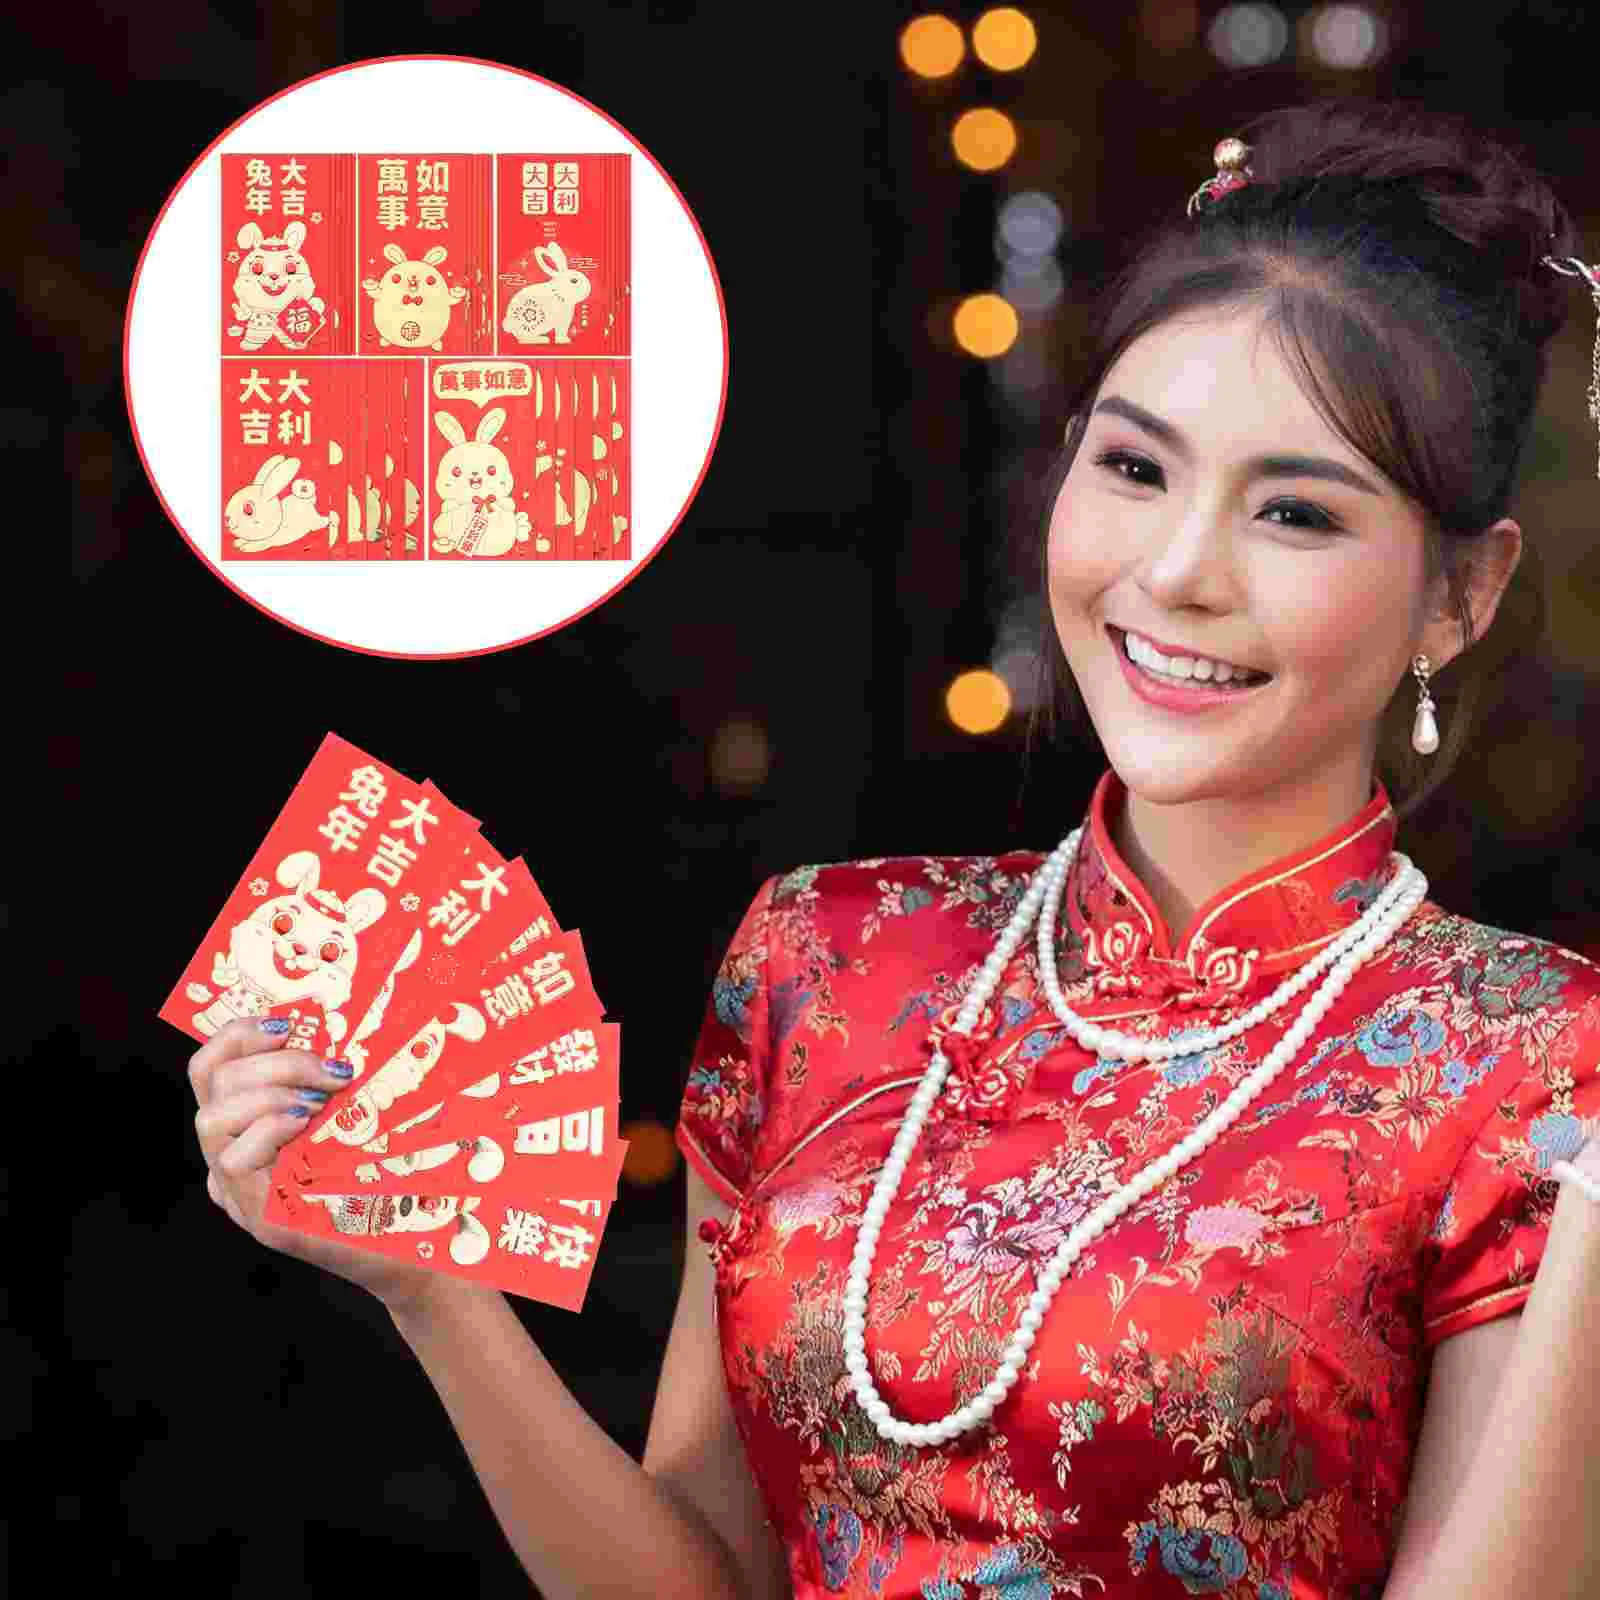 

Red Year New Envelope Envelopes Chinese Money Lunar Packet Festival Spring Wedding Rabbit Hong Bao Li Xi Bunny Zodiac The